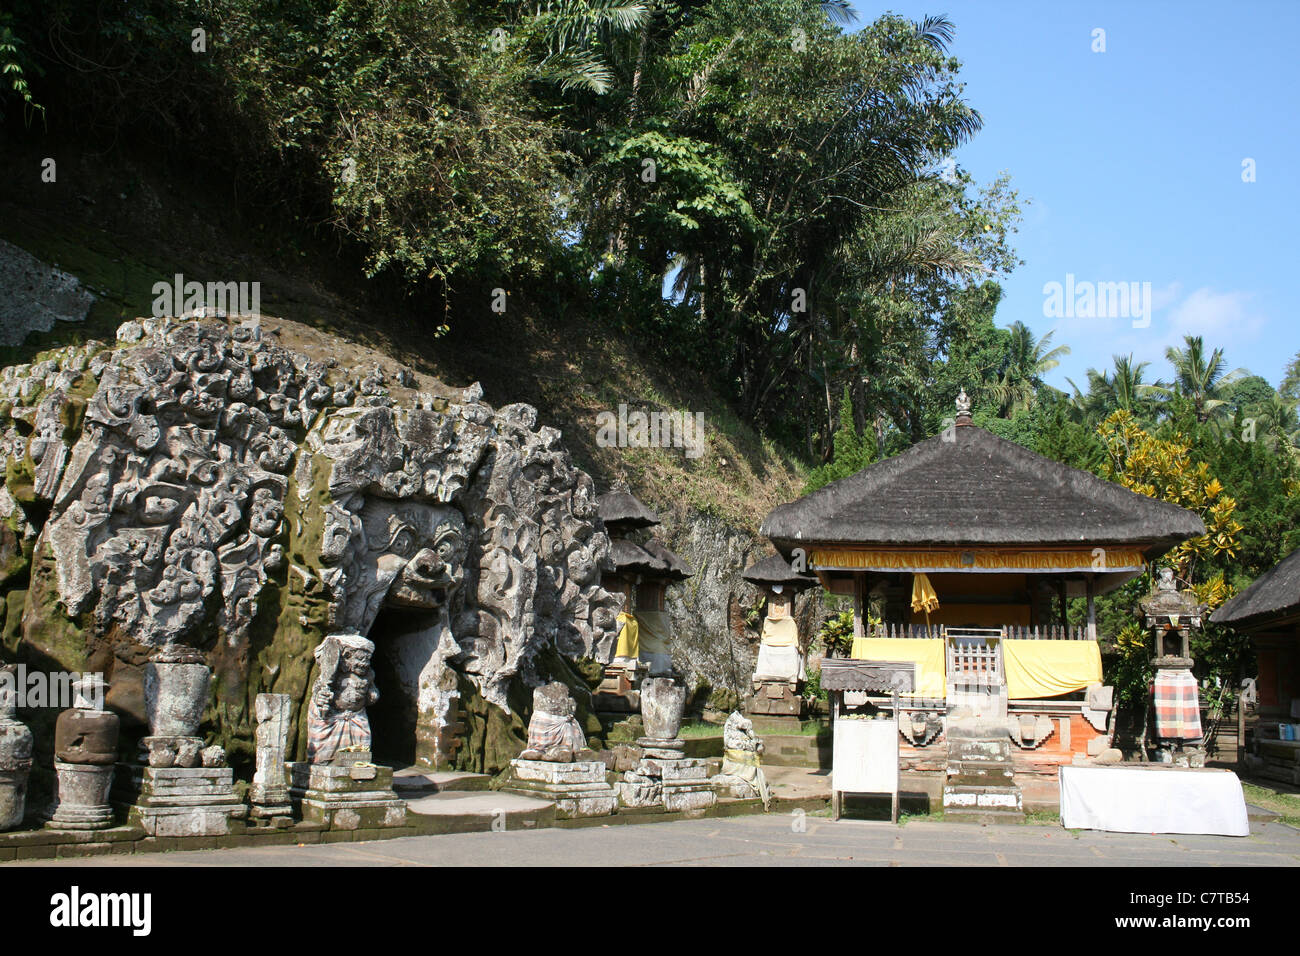 Goa Gajah, or Elephant Cave, Bali Stock Photo